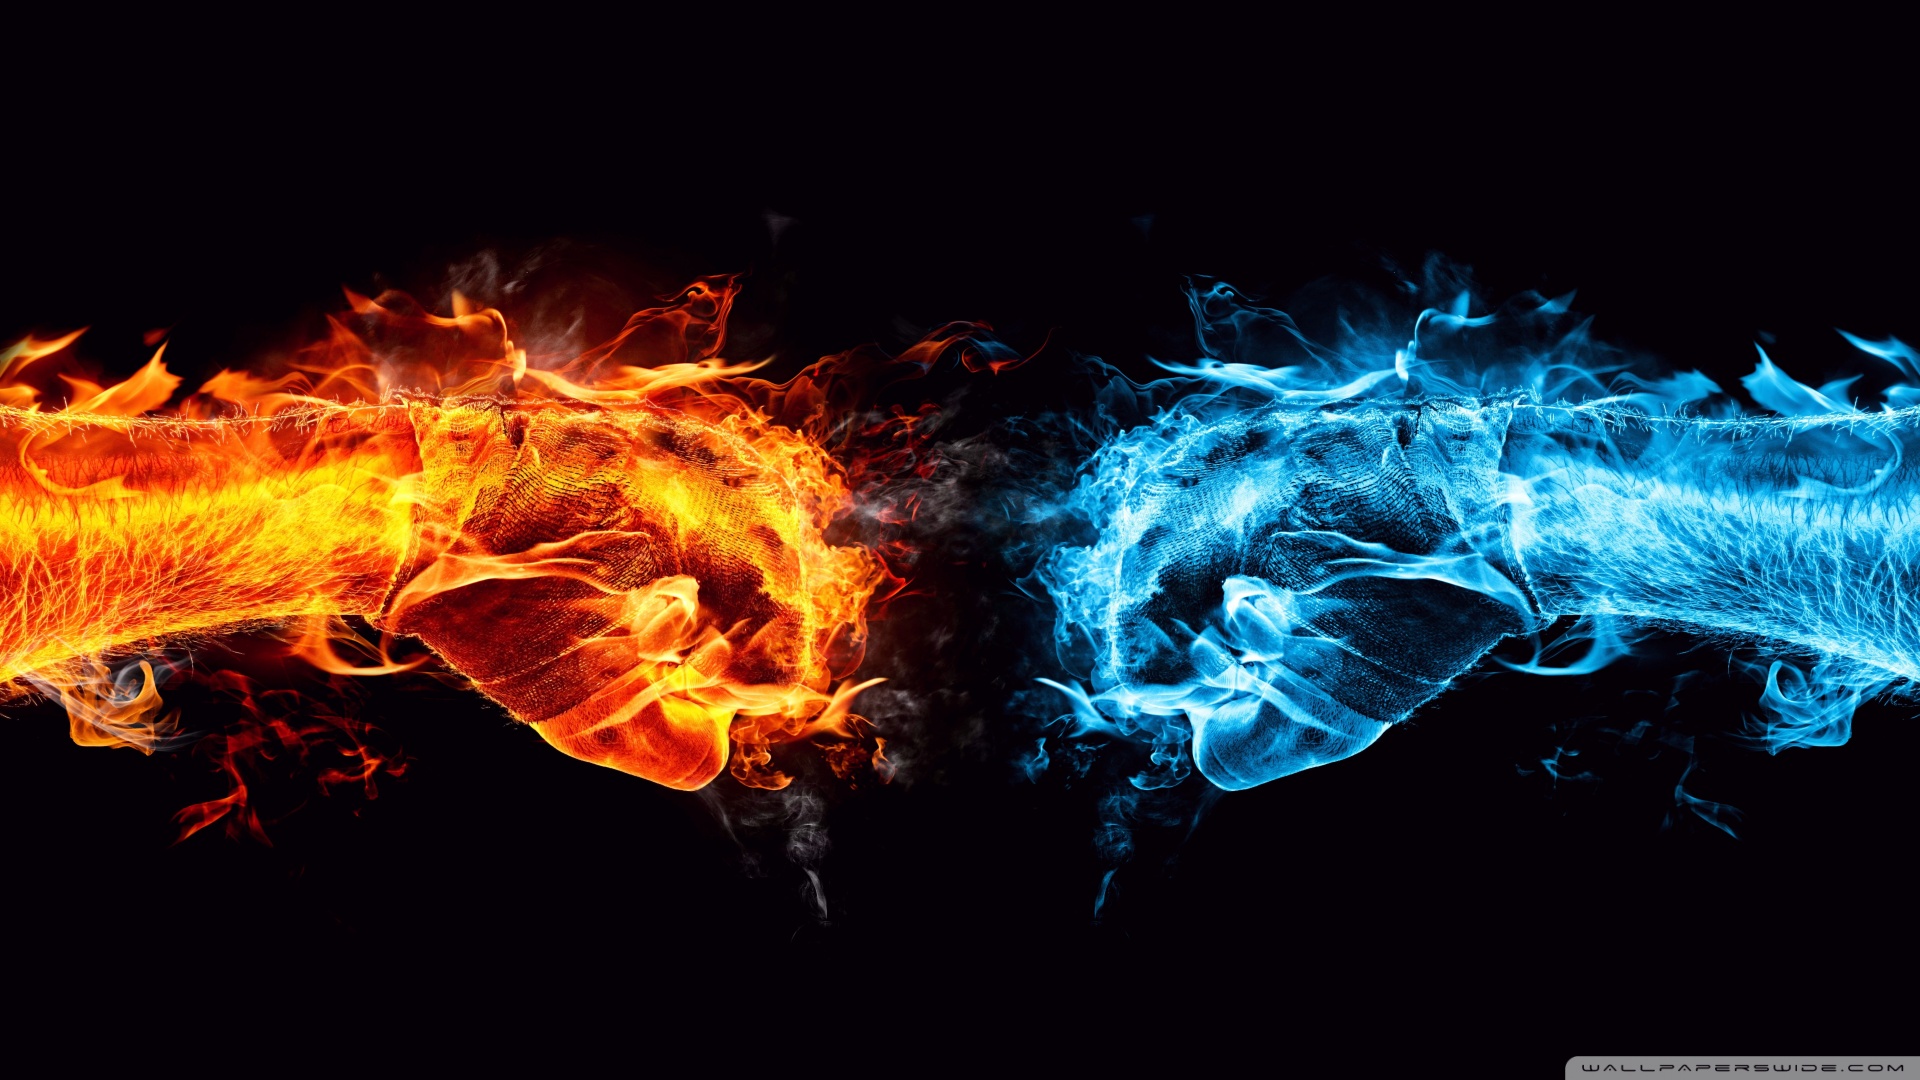 Fire Fist vs Water Fist HD desktop wallpaper High Definition